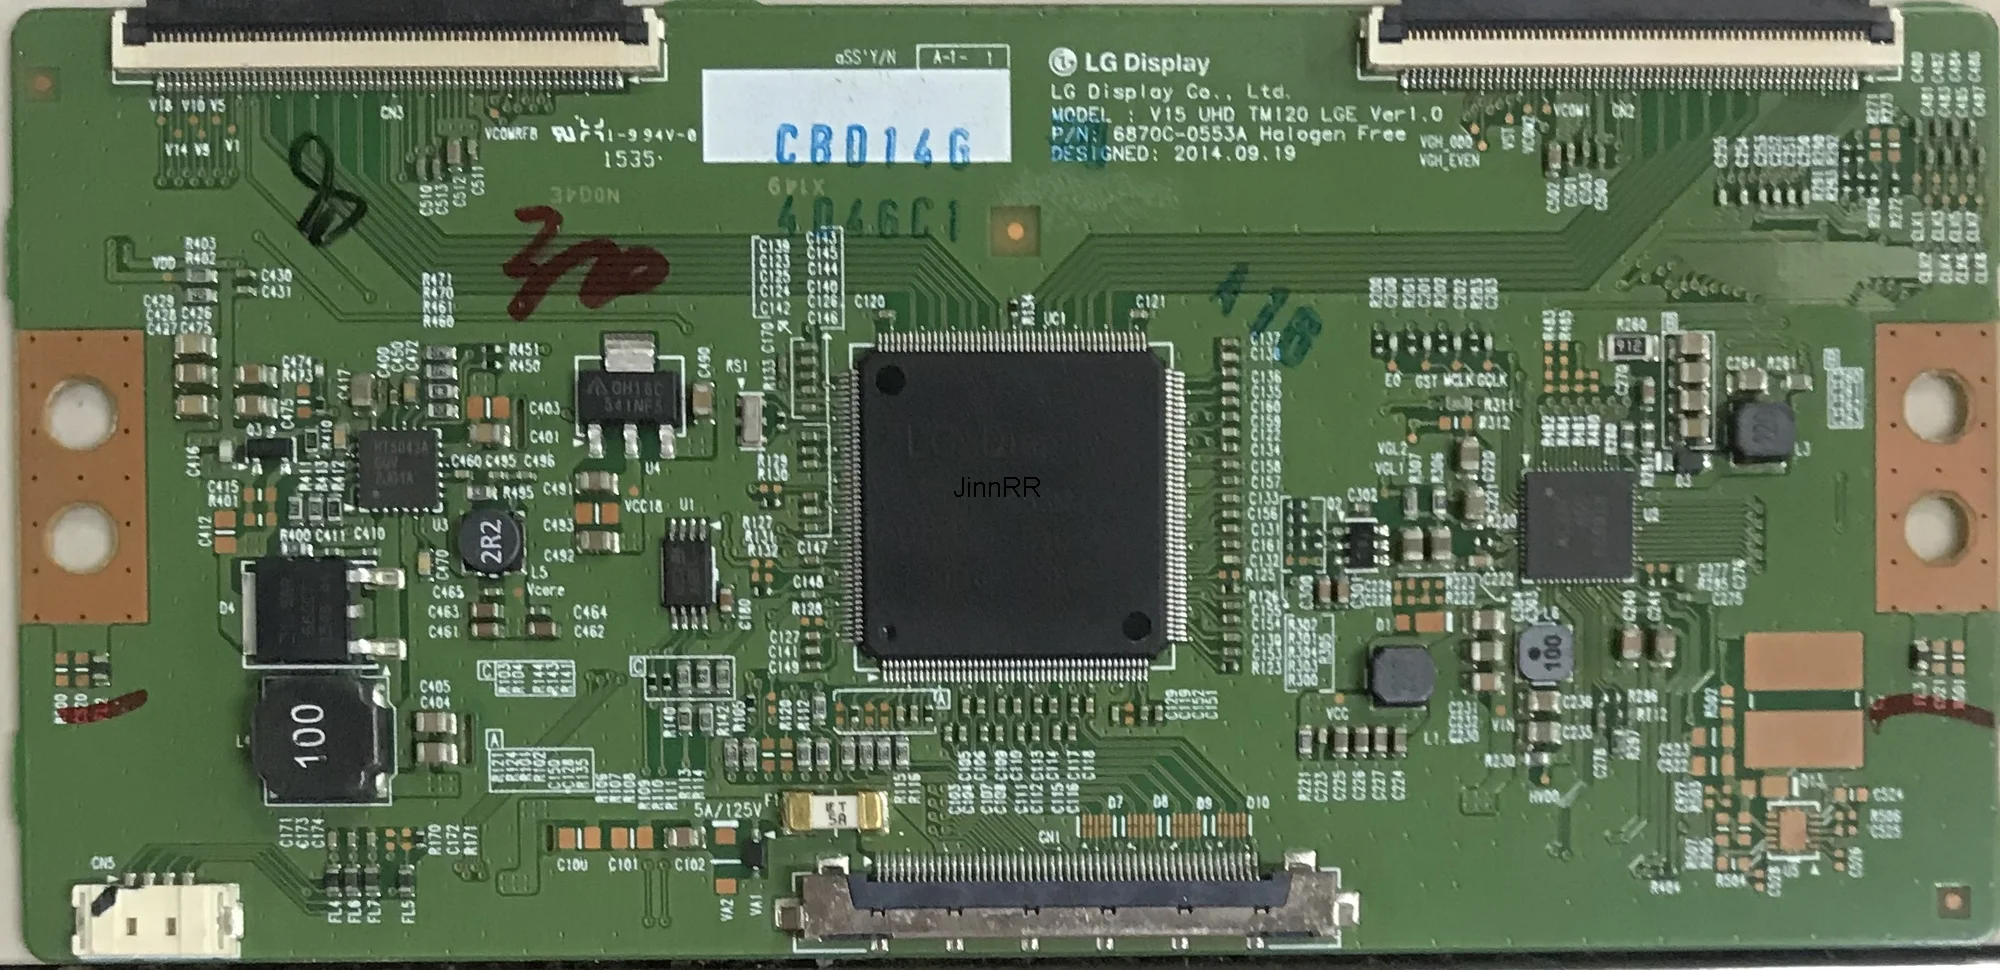 

New original V15 UHD tm120 ver 0.4 6870c-0553a logic board